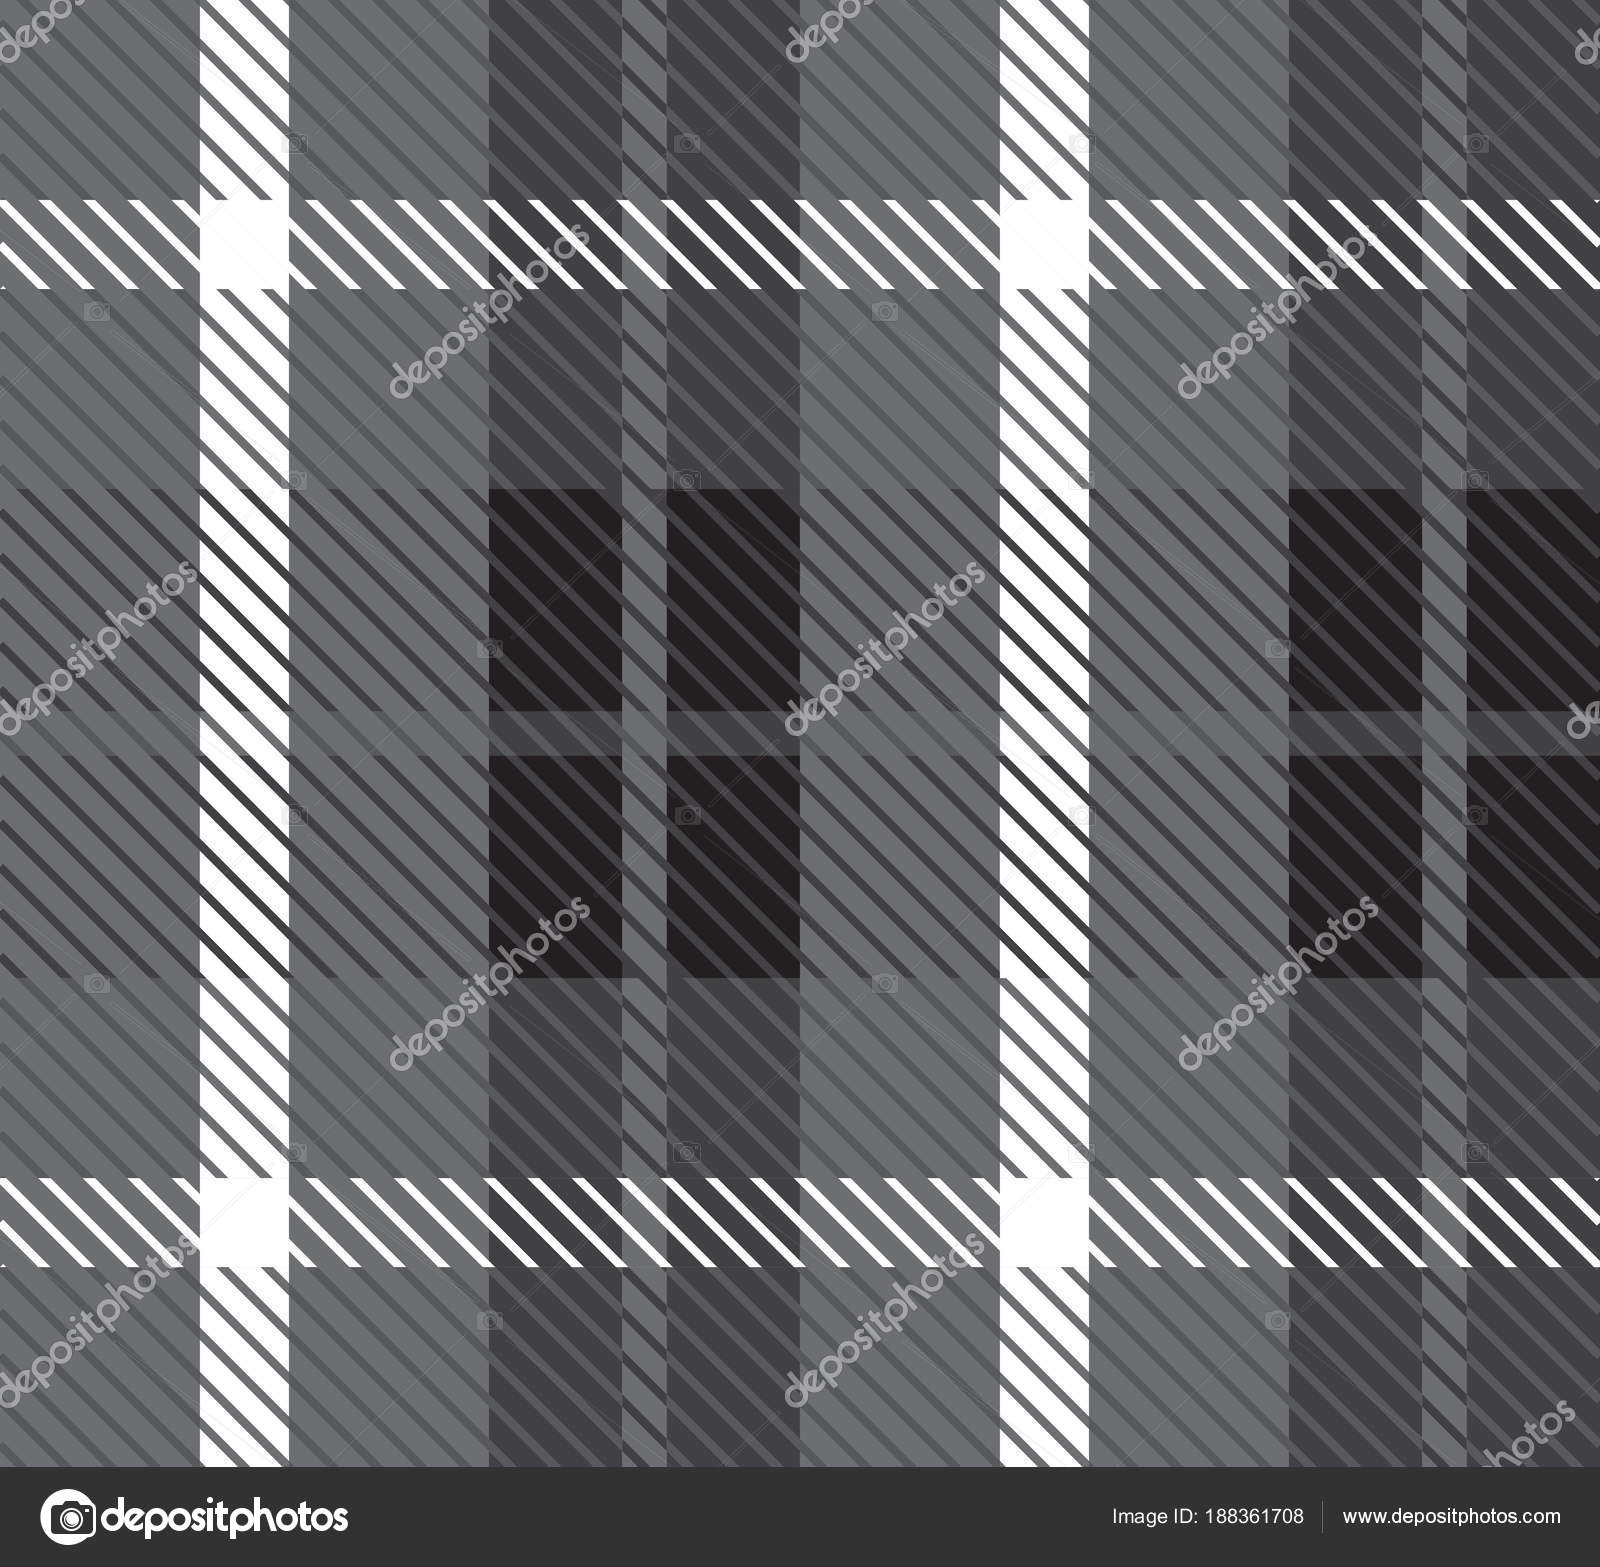 White and black checkered plaid fabric texture, tartan texture